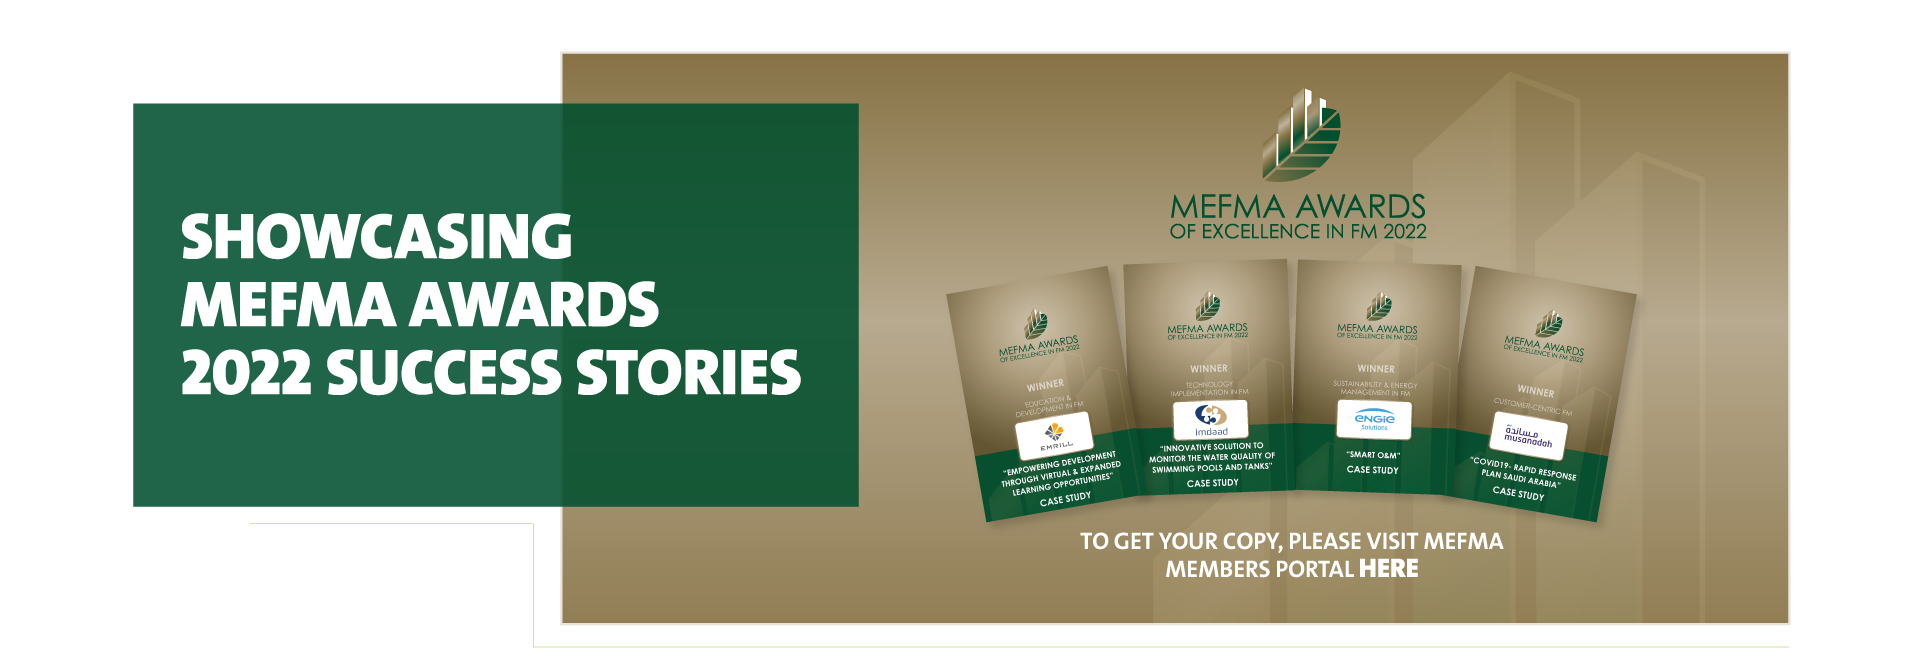 Number of digital copies of MEFMA awards 2022